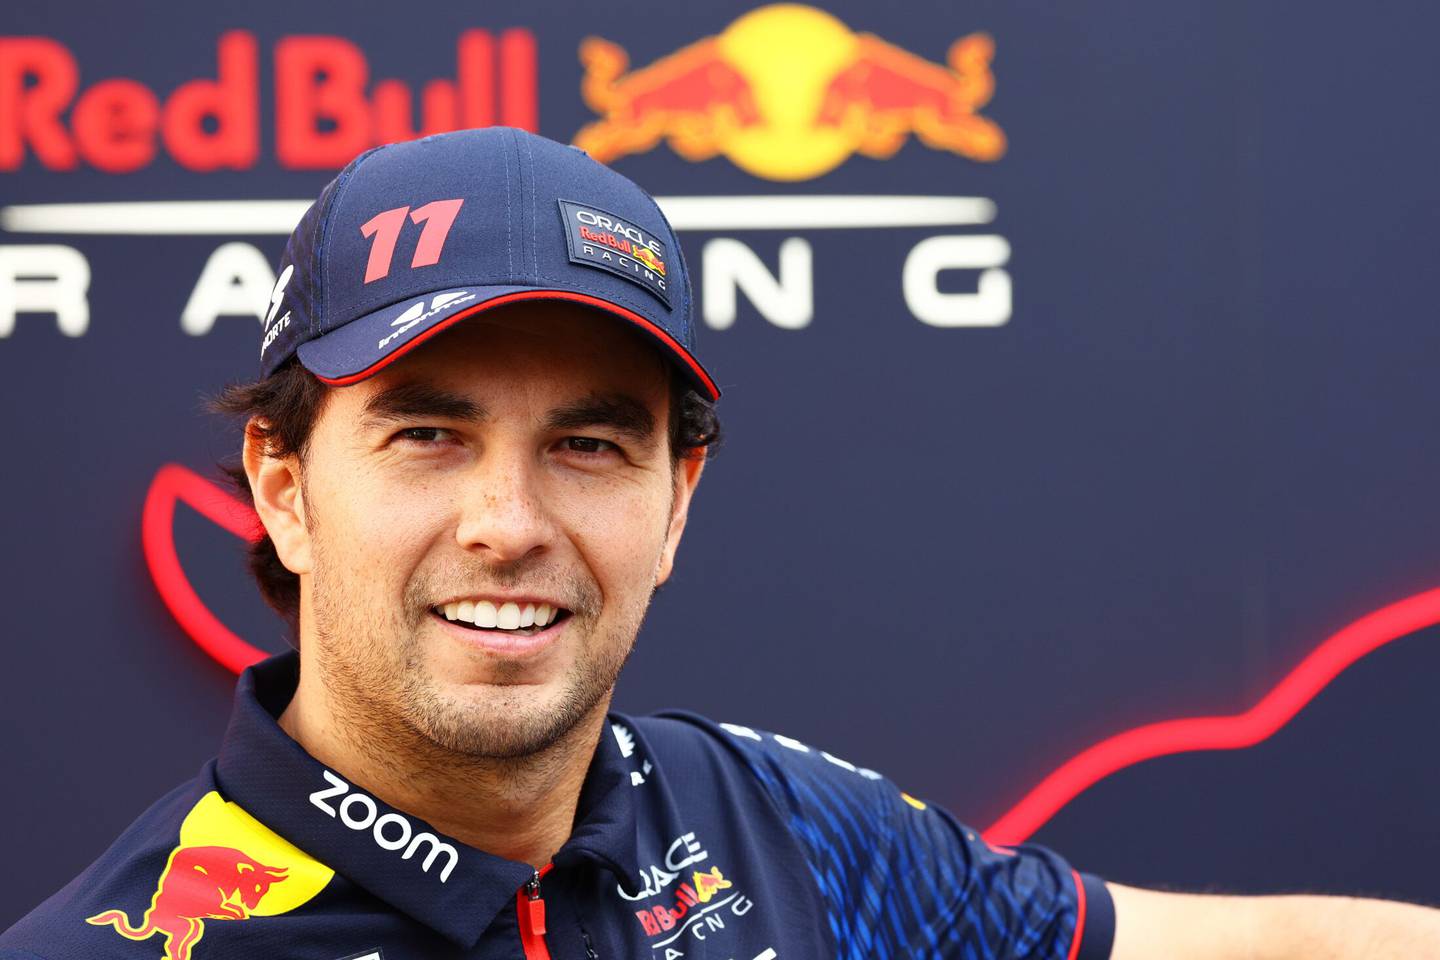 Sergio Pérez of Red Bull Racing.dfd